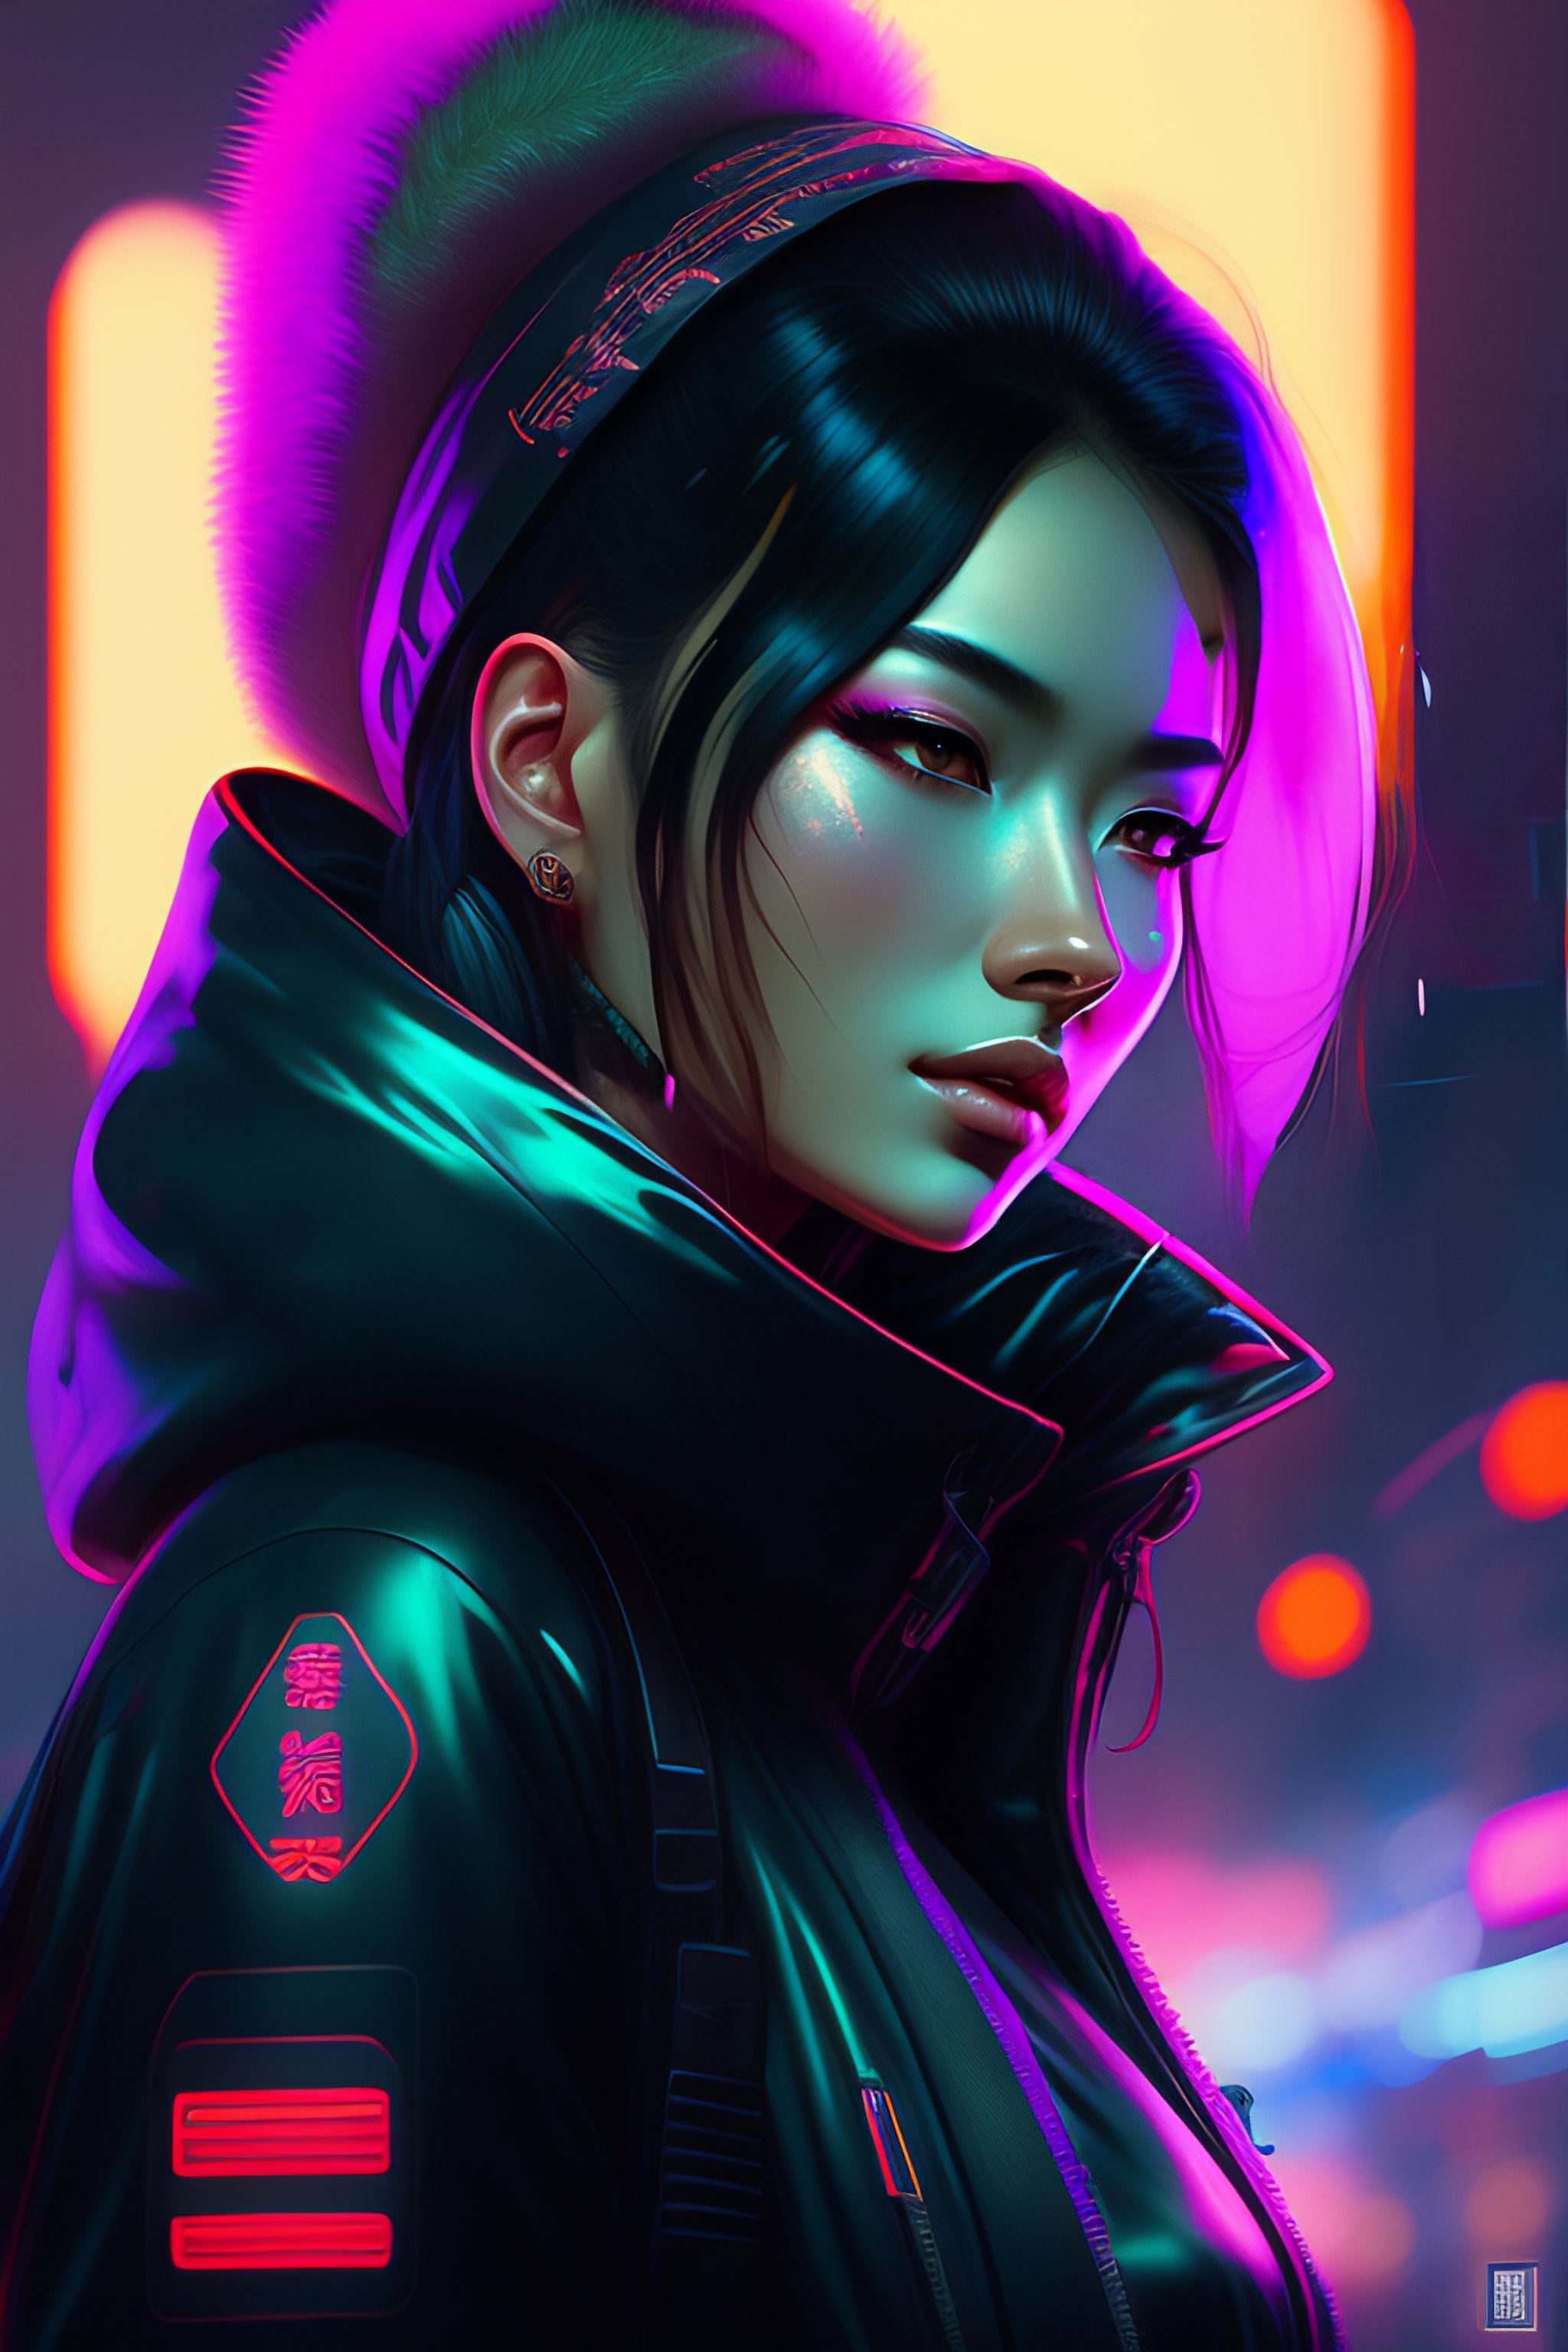 Cyberpunk-style girl with beautiful neon colors - Stock Illustration  [99174420] - PIXTA